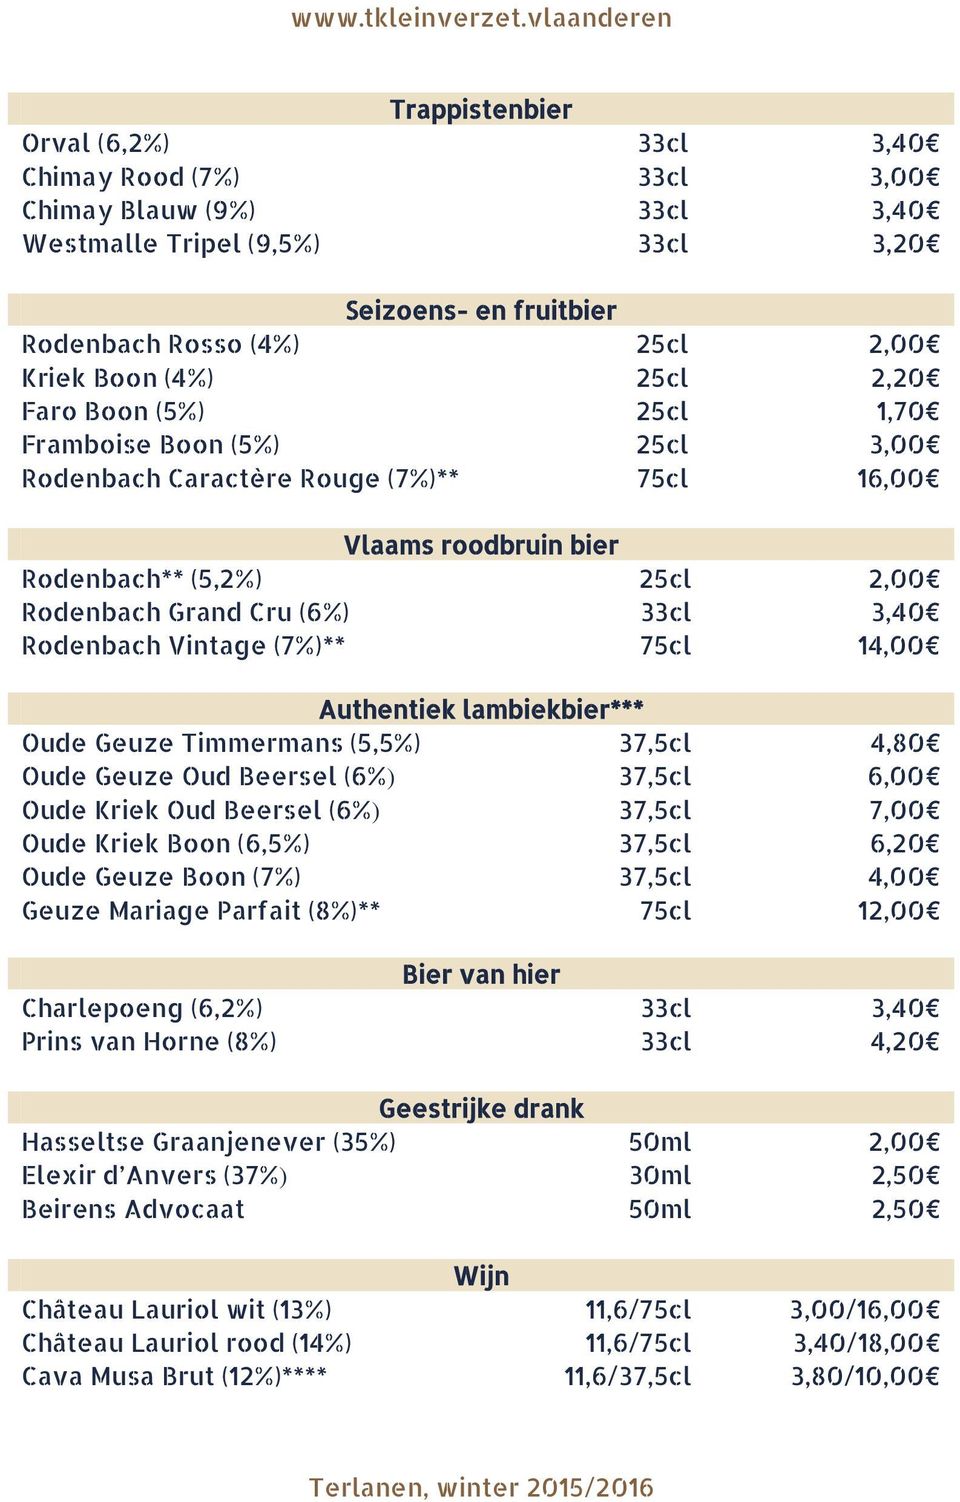 Rodenbach Vintage (7%)** 75cl 14,00 Authentiek lambiekbier*** Oude Geuze Timmermans (5,5%) 37,5cl 4,80 Oude Geuze Oud Beersel (6%) 37,5cl 6,00 Oude Kriek Oud Beersel (6%) 37,5cl 7,00 Oude Kriek Boon